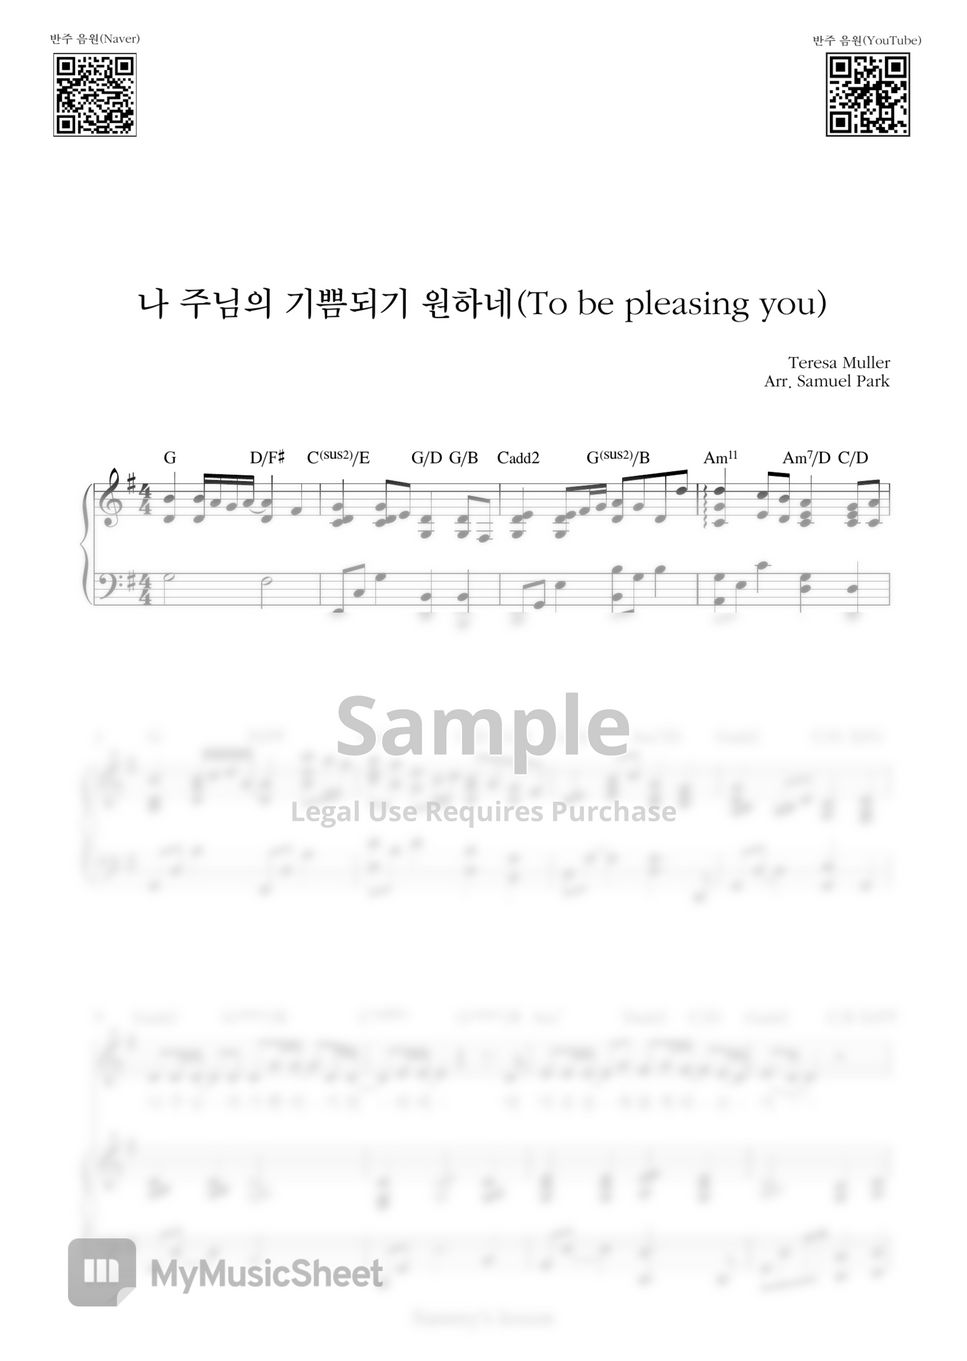 Teresa Muller - 나 주님의 기쁨되기 원하네(To be pleasing you) (Piano Cover) by Samuel Park